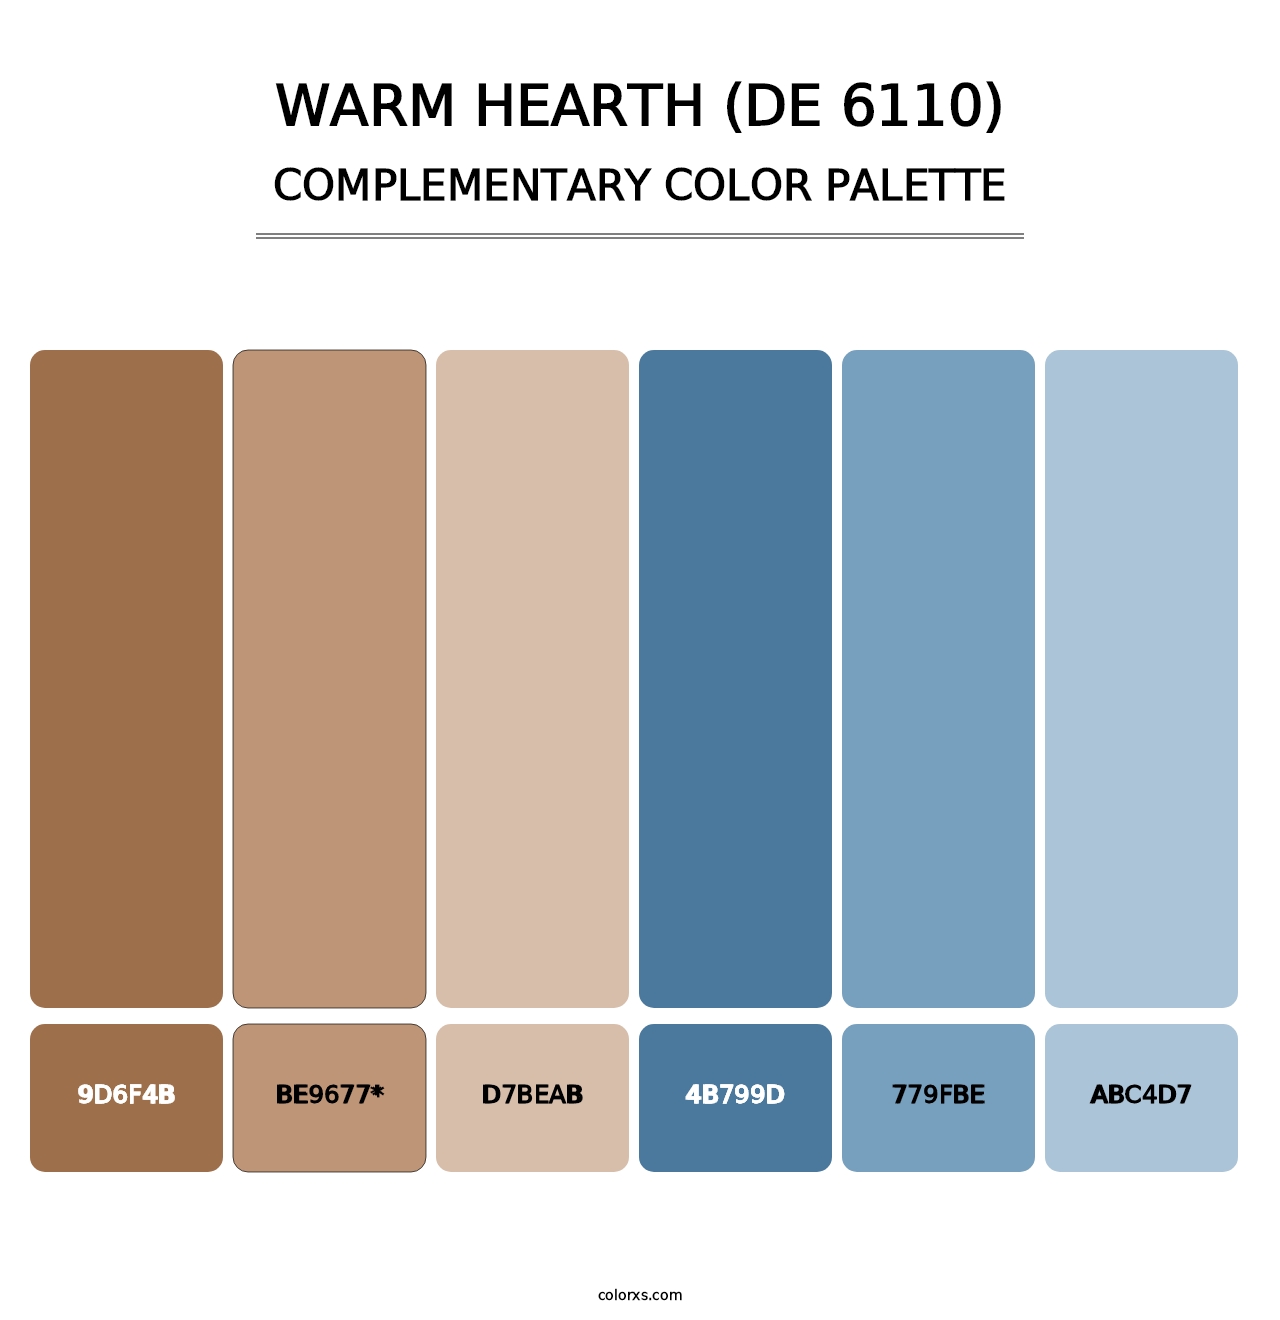 Warm Hearth (DE 6110) - Complementary Color Palette